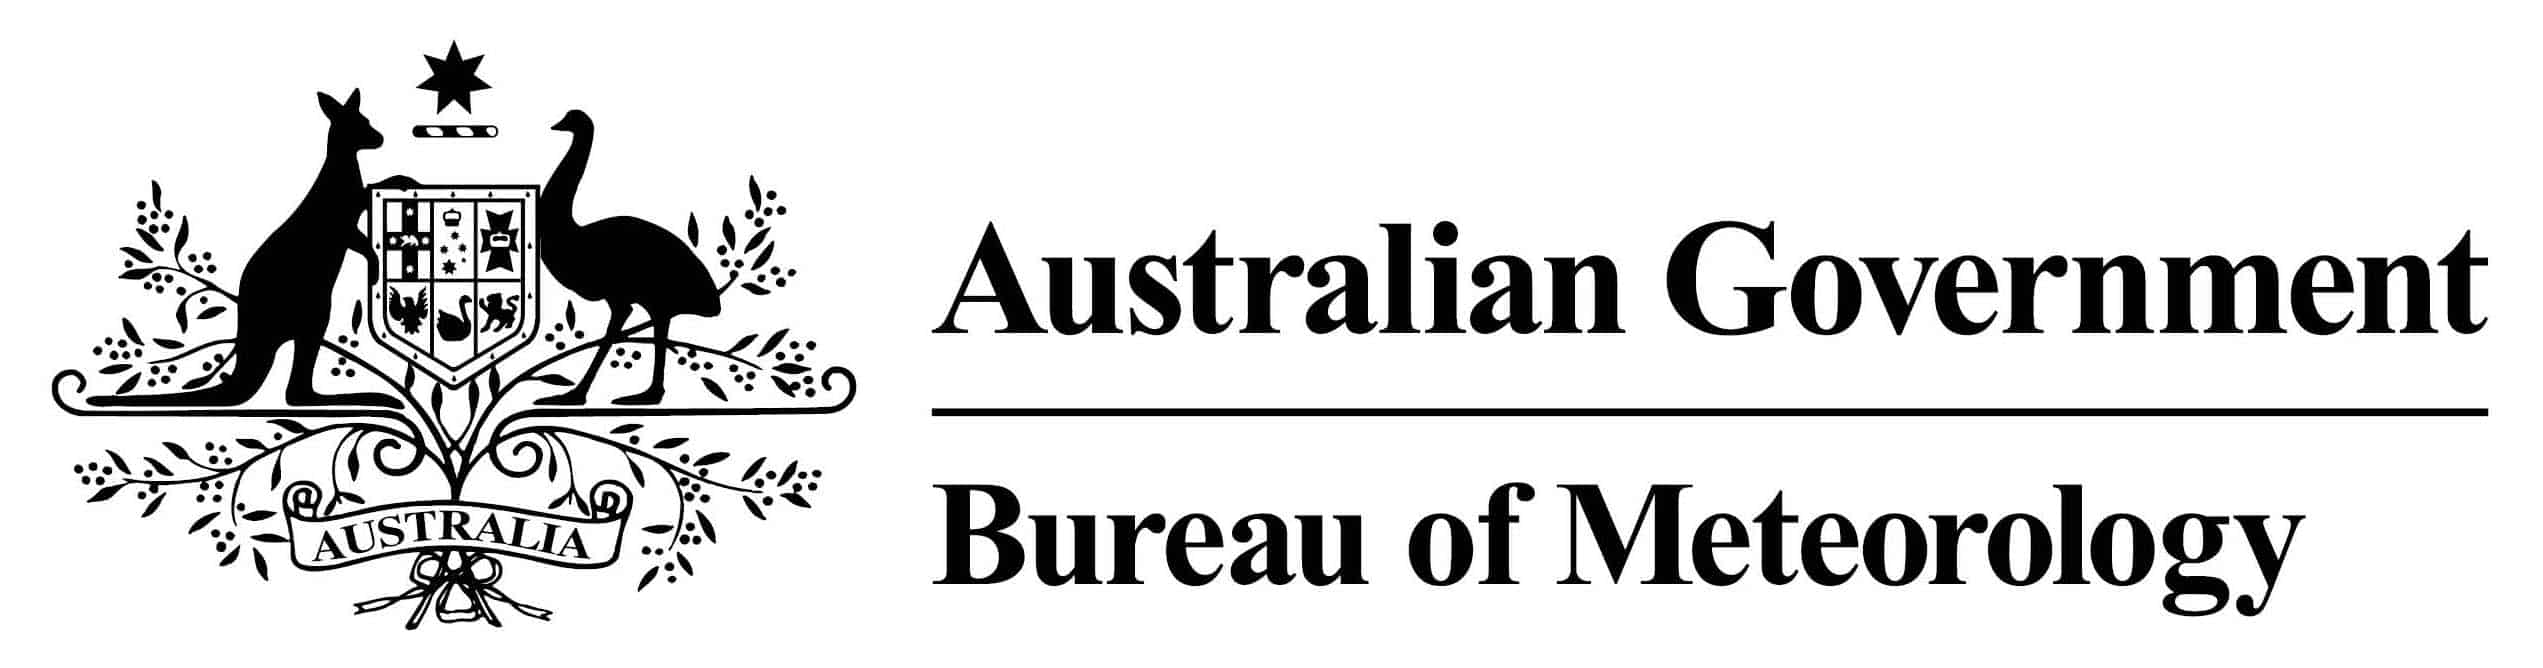 bureau of meteorology australia